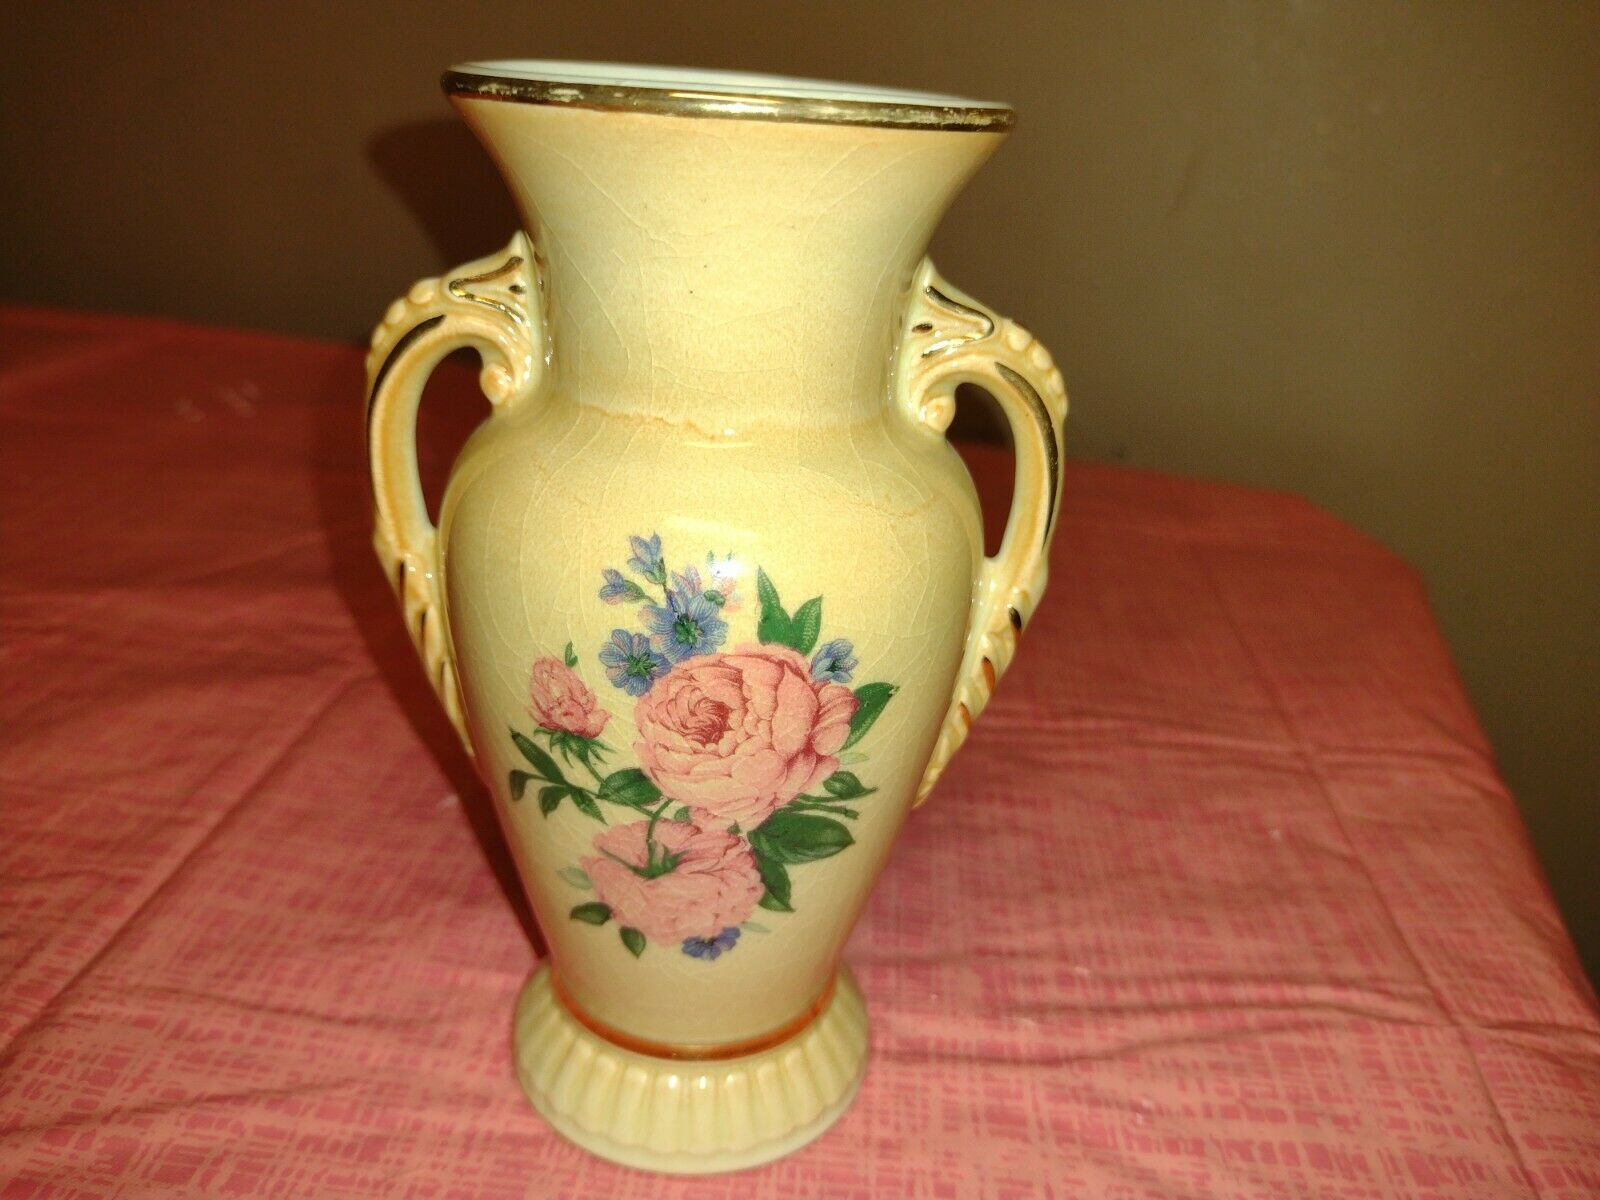 Spaulding China Sebring Small Vase